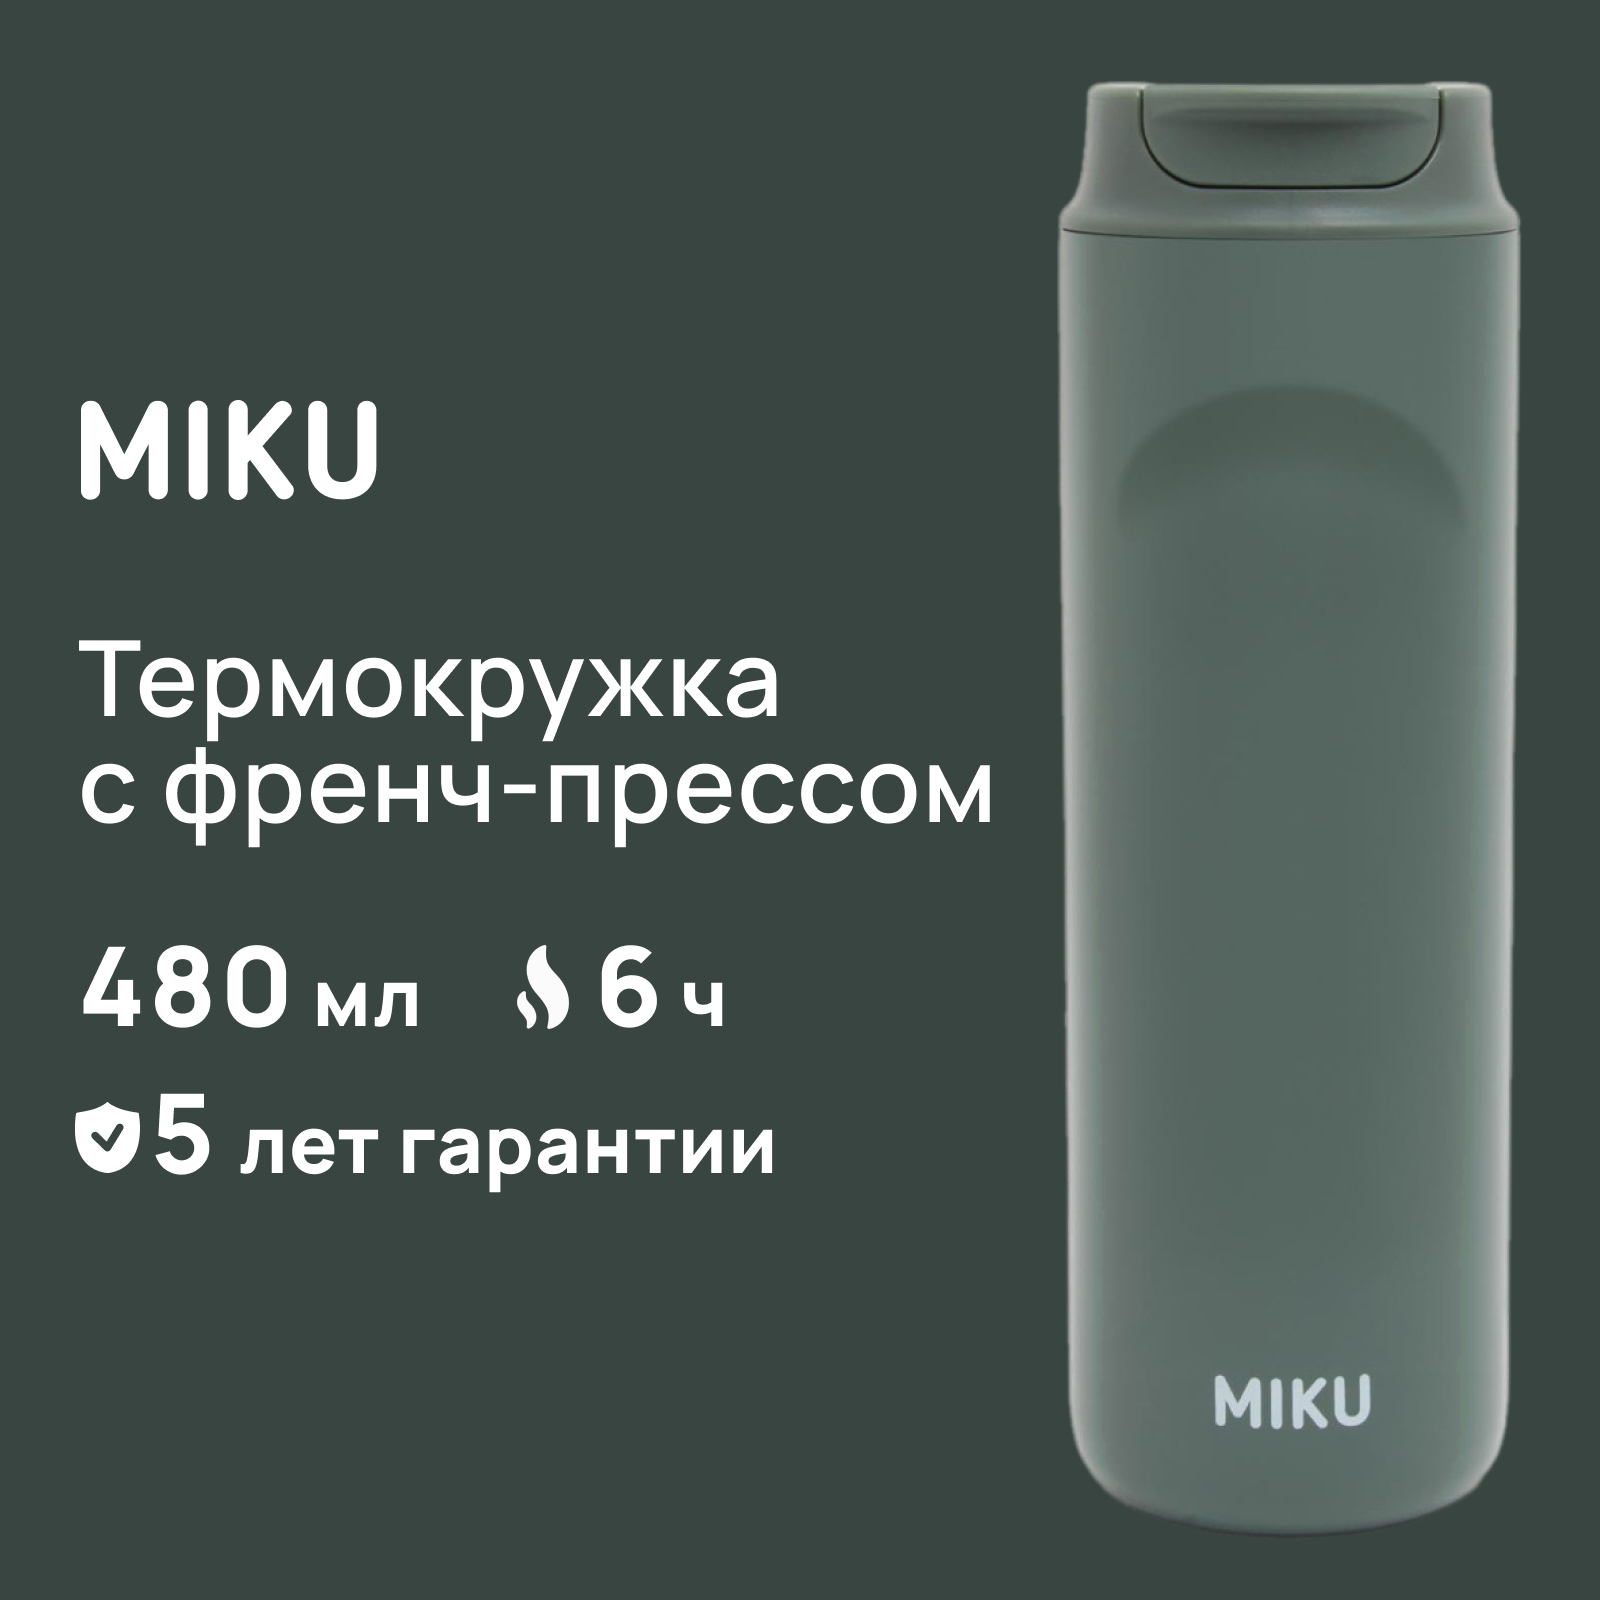 Miku Green 480ml Thermo Mug with French Press